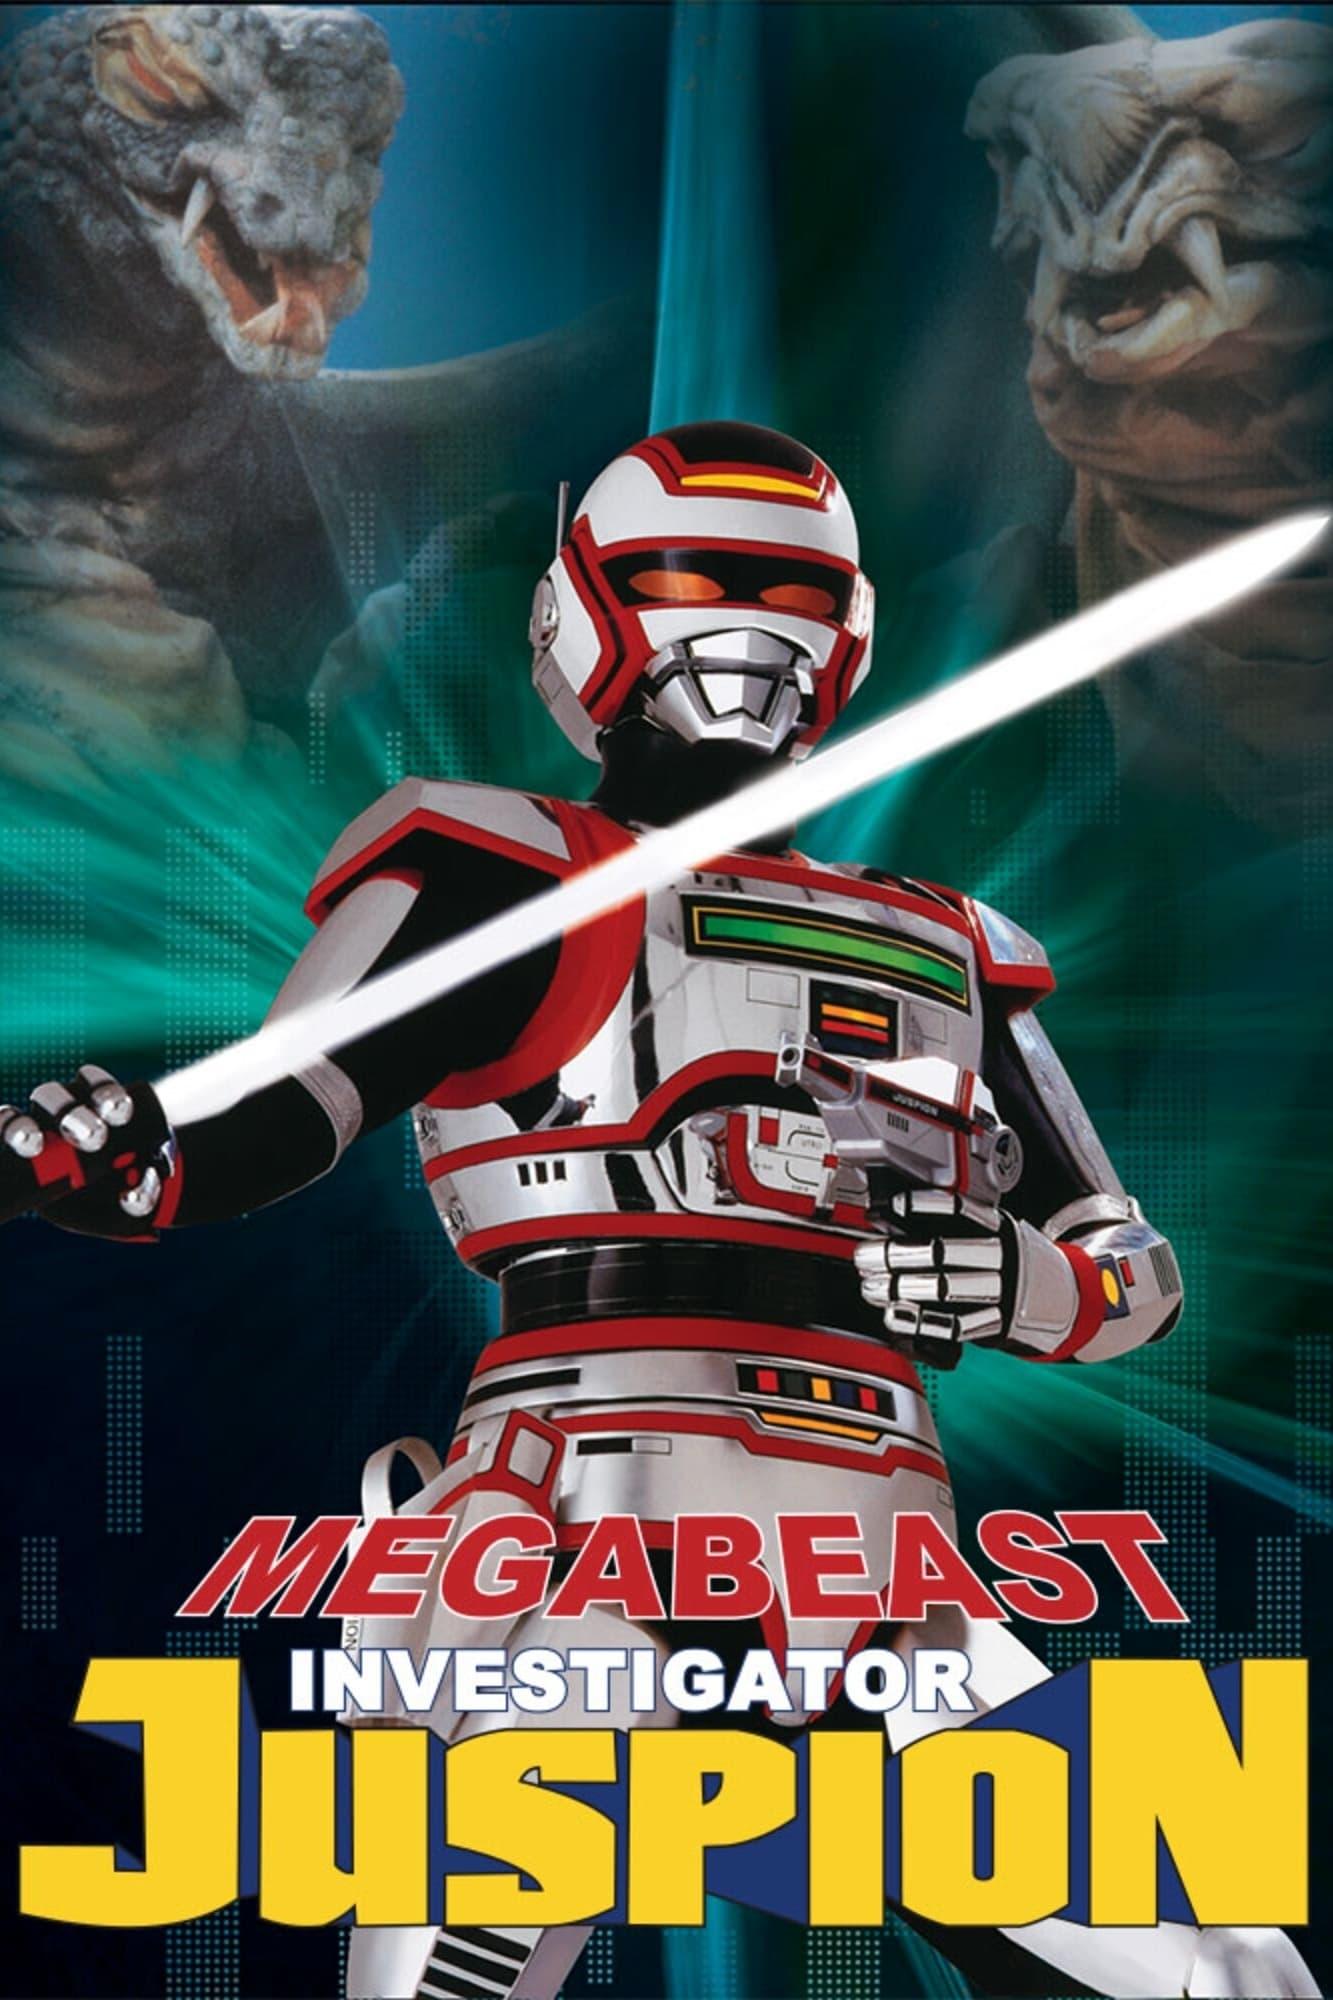 Megabeast Investigator Juspion poster